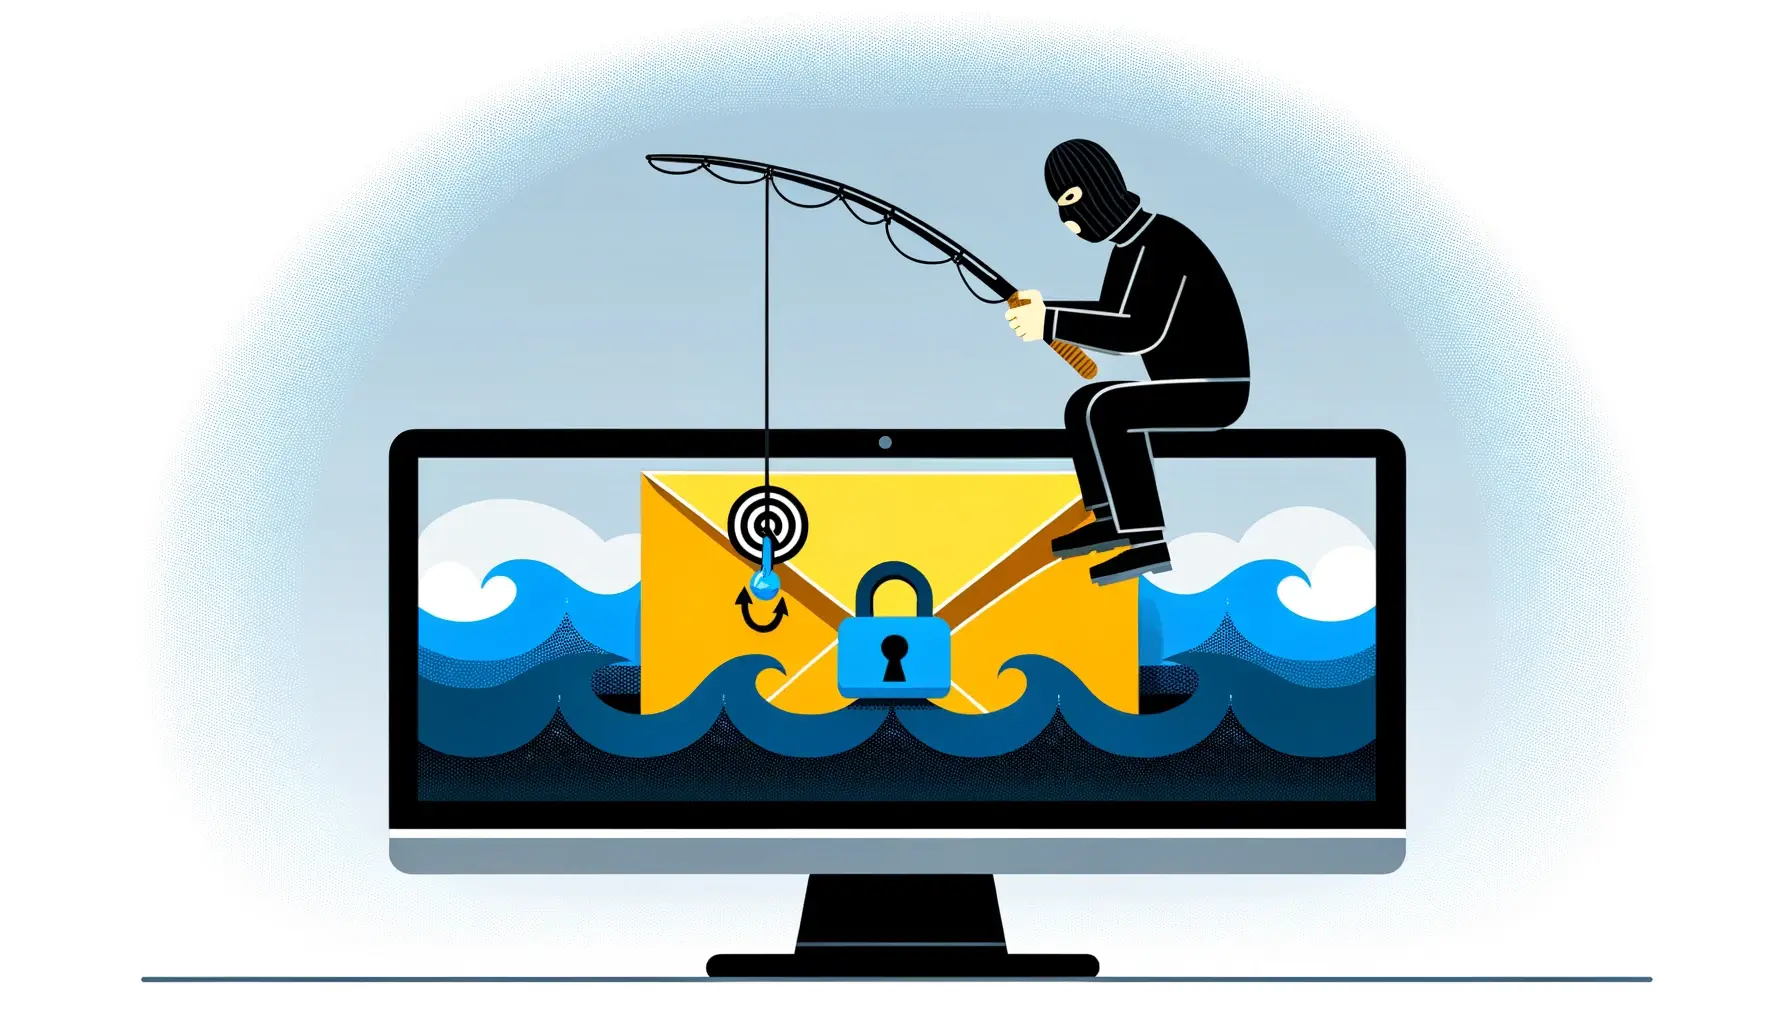 How to Prevent Phishing Attacks